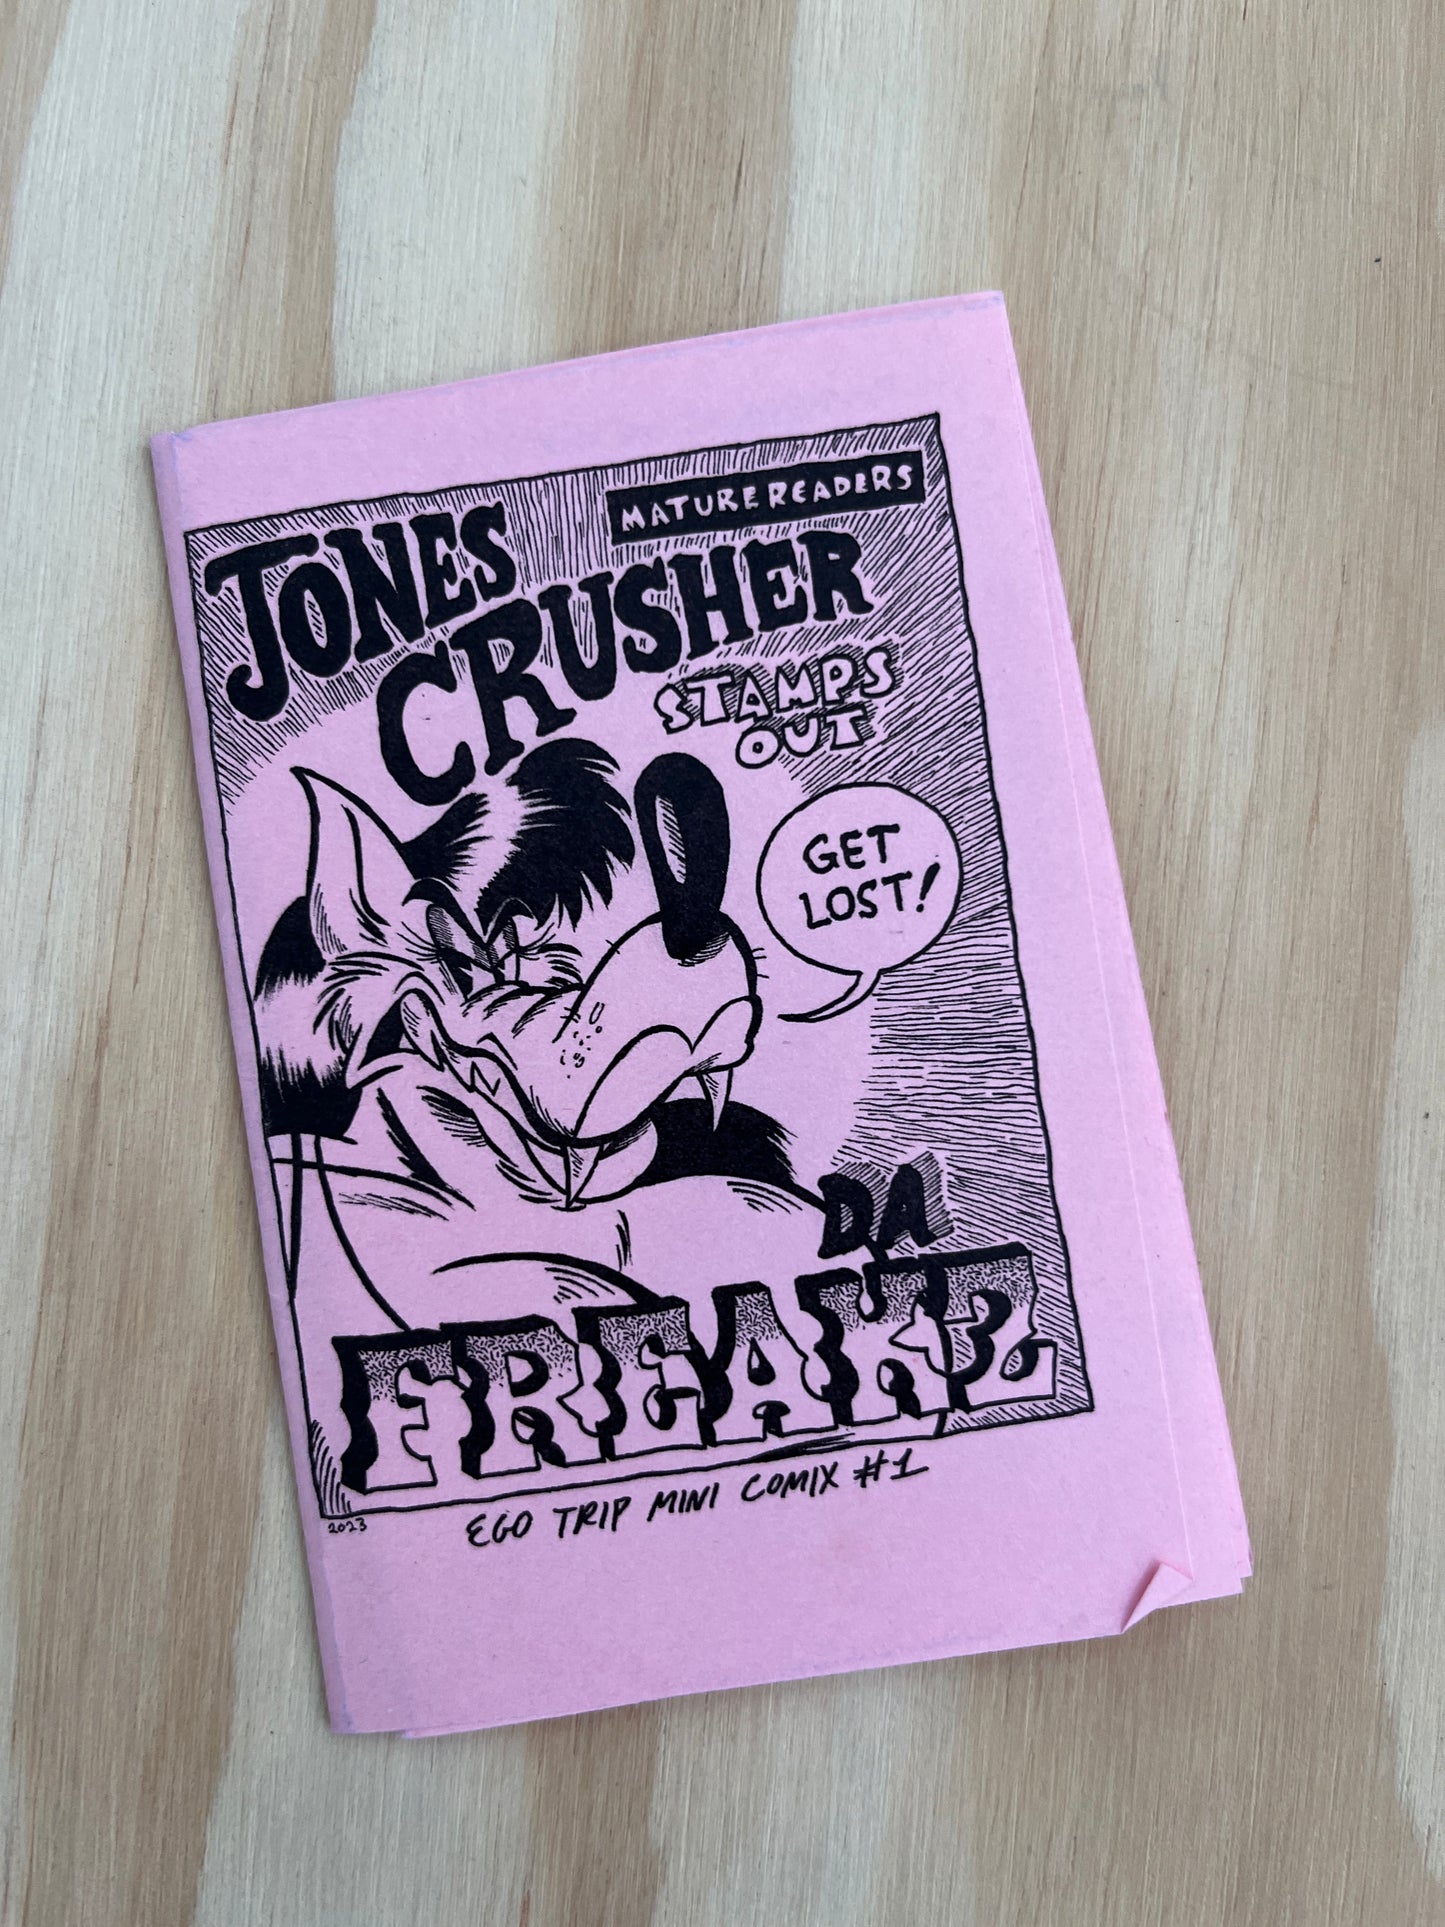 EGO TRIP Mini Comix #1- Jones Crusher Stamps Out Da Freakz